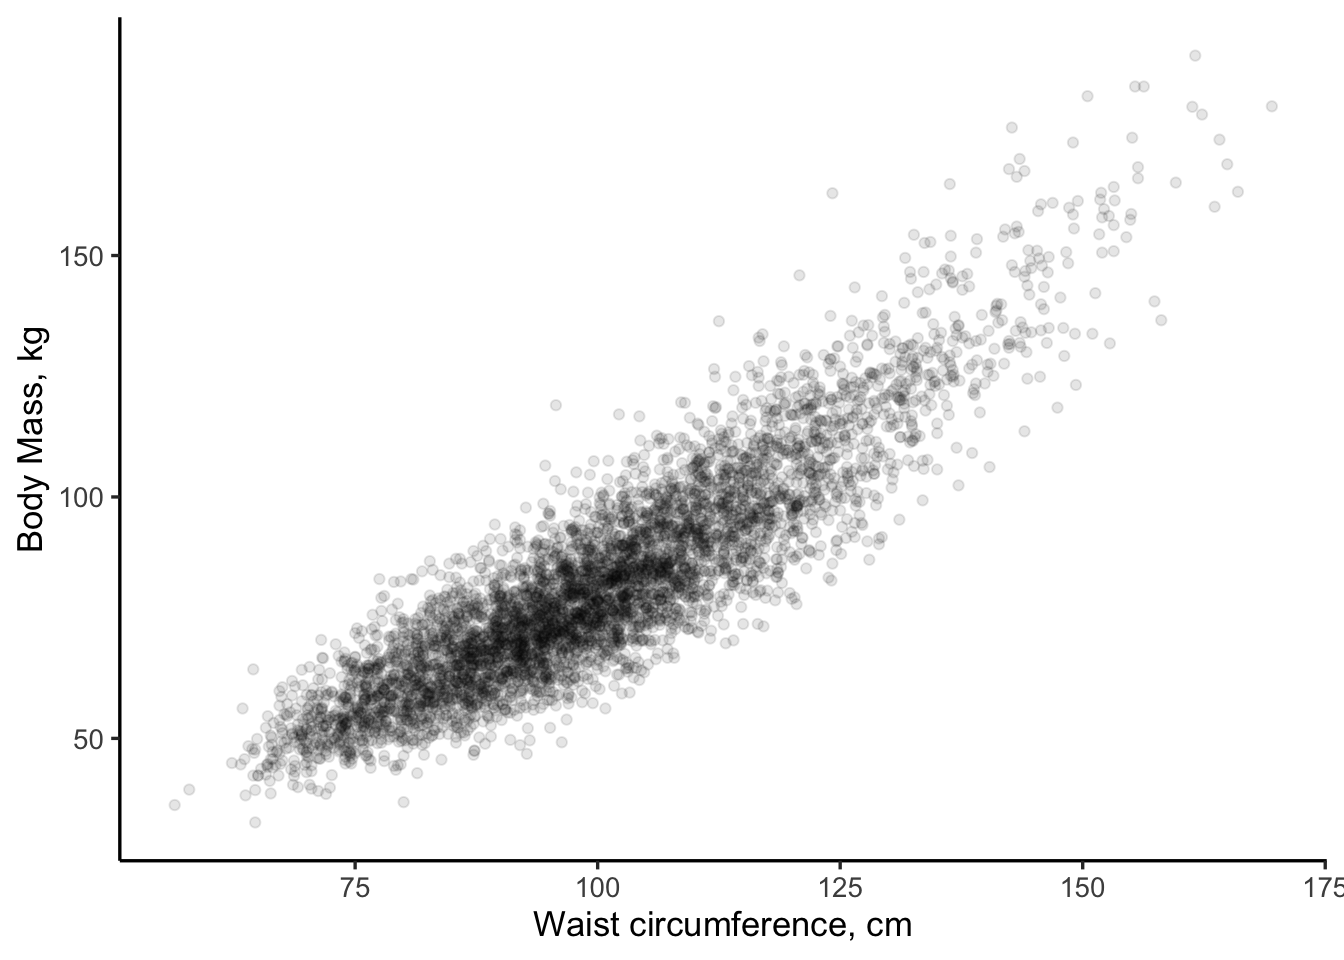 Scatterplot of body mass (kg) vs. waist circumfrence (cm) for US adults.